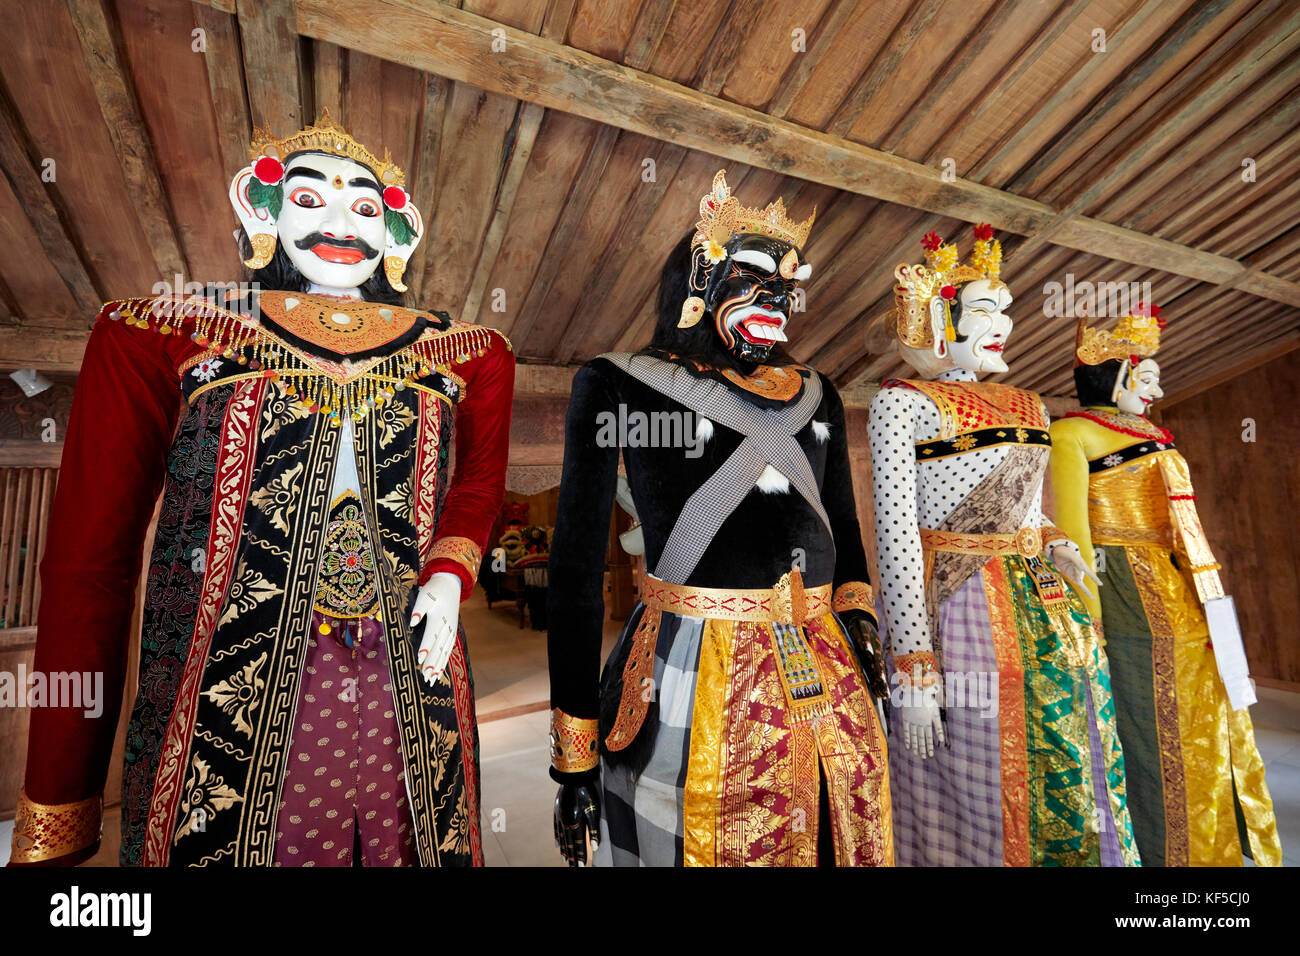 Barong Landung, traditional Balinese puppets. Setia Darma House of Masks and Puppets, Mas, Ubud, Bali, Indonesia. Stock Photo